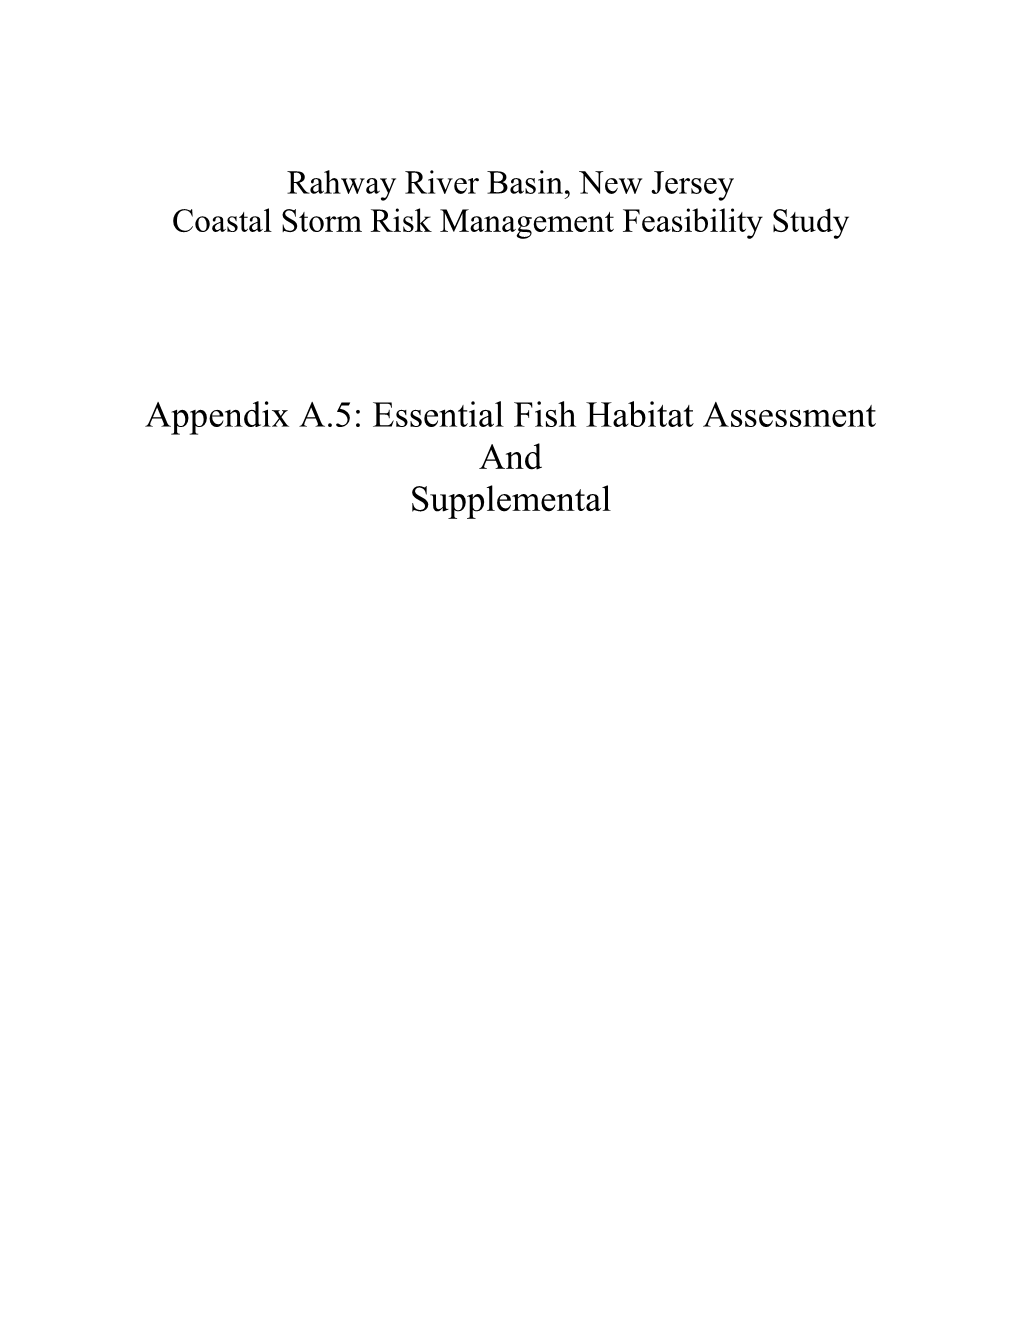 Essential Fish Habitat Assessment and Supplemental